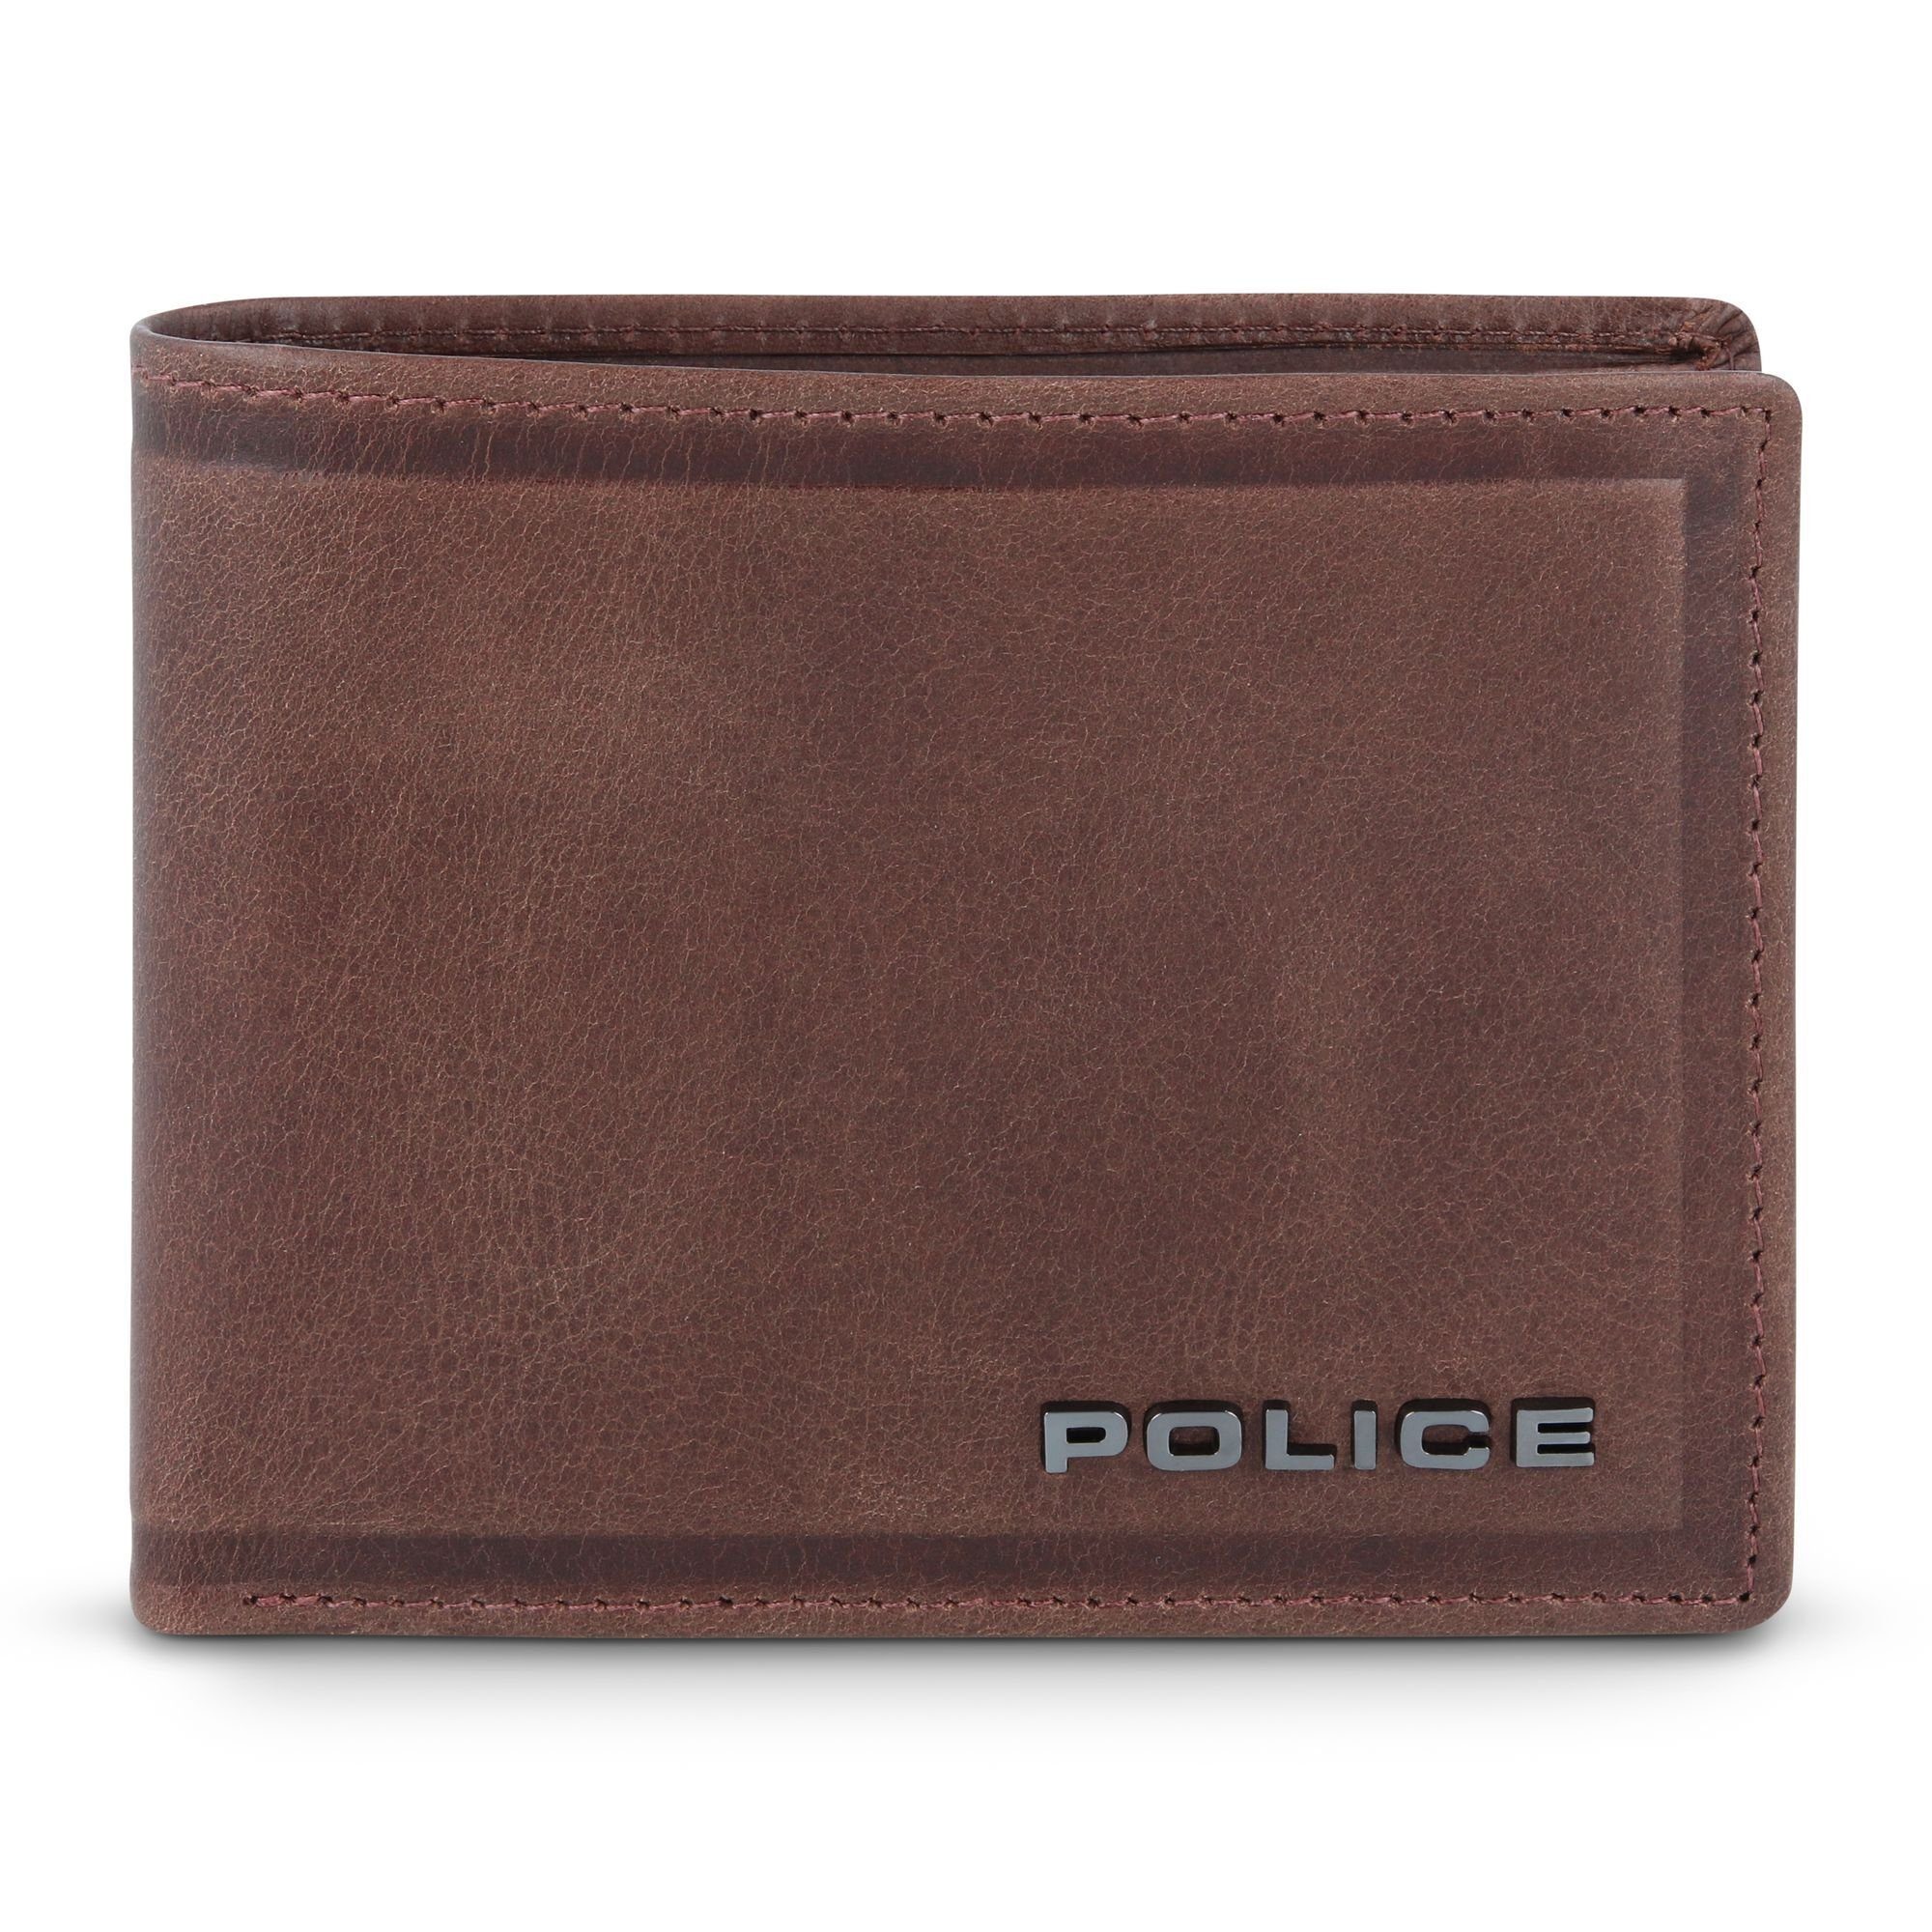 Police Leder brown Geldbörse,